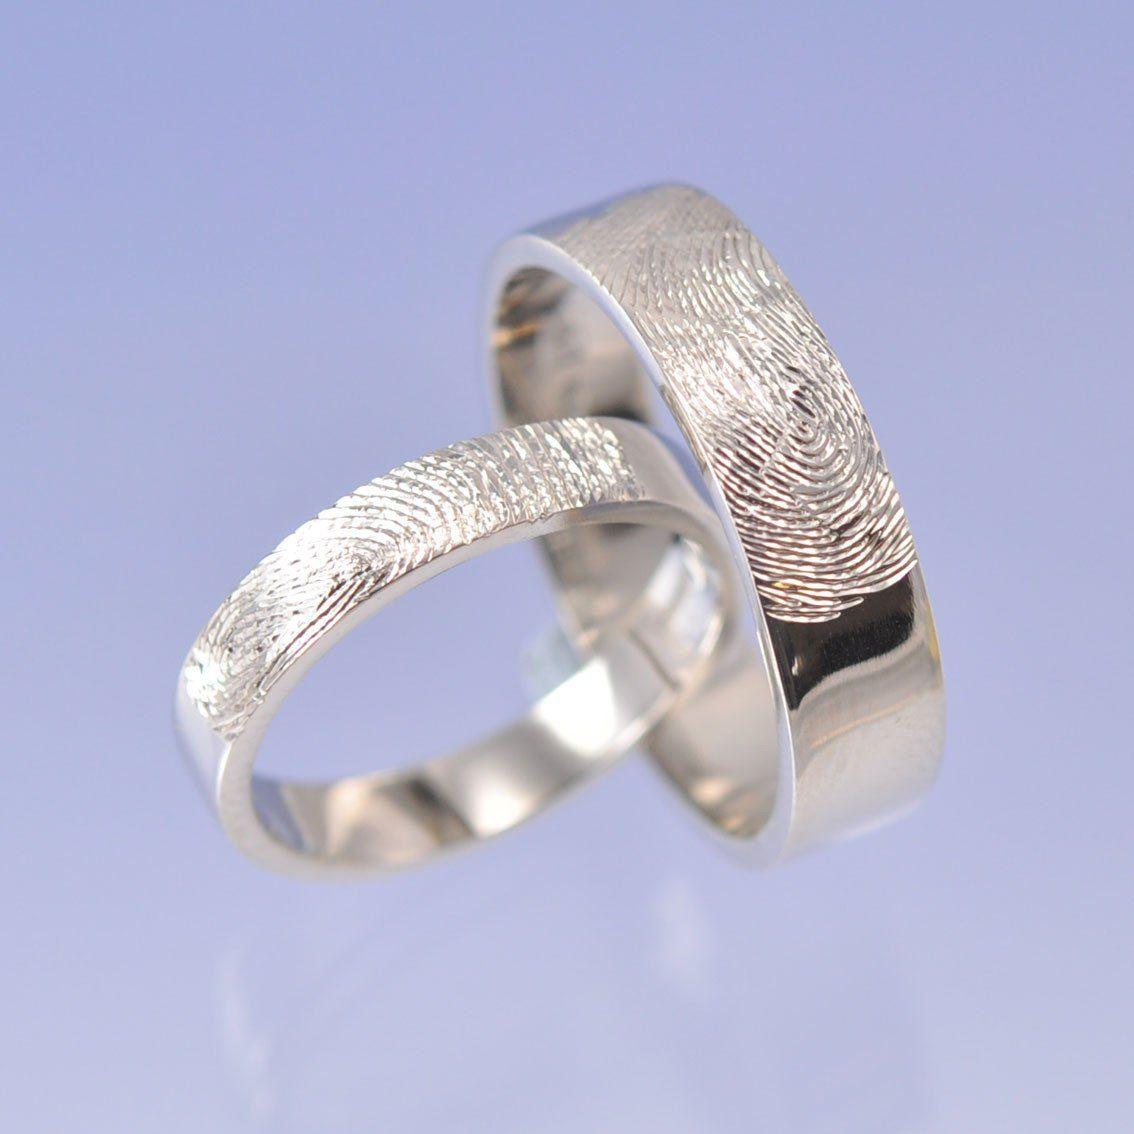 Fingerprint Ring Gold - 9k Ring by Chris Parry Jewellery